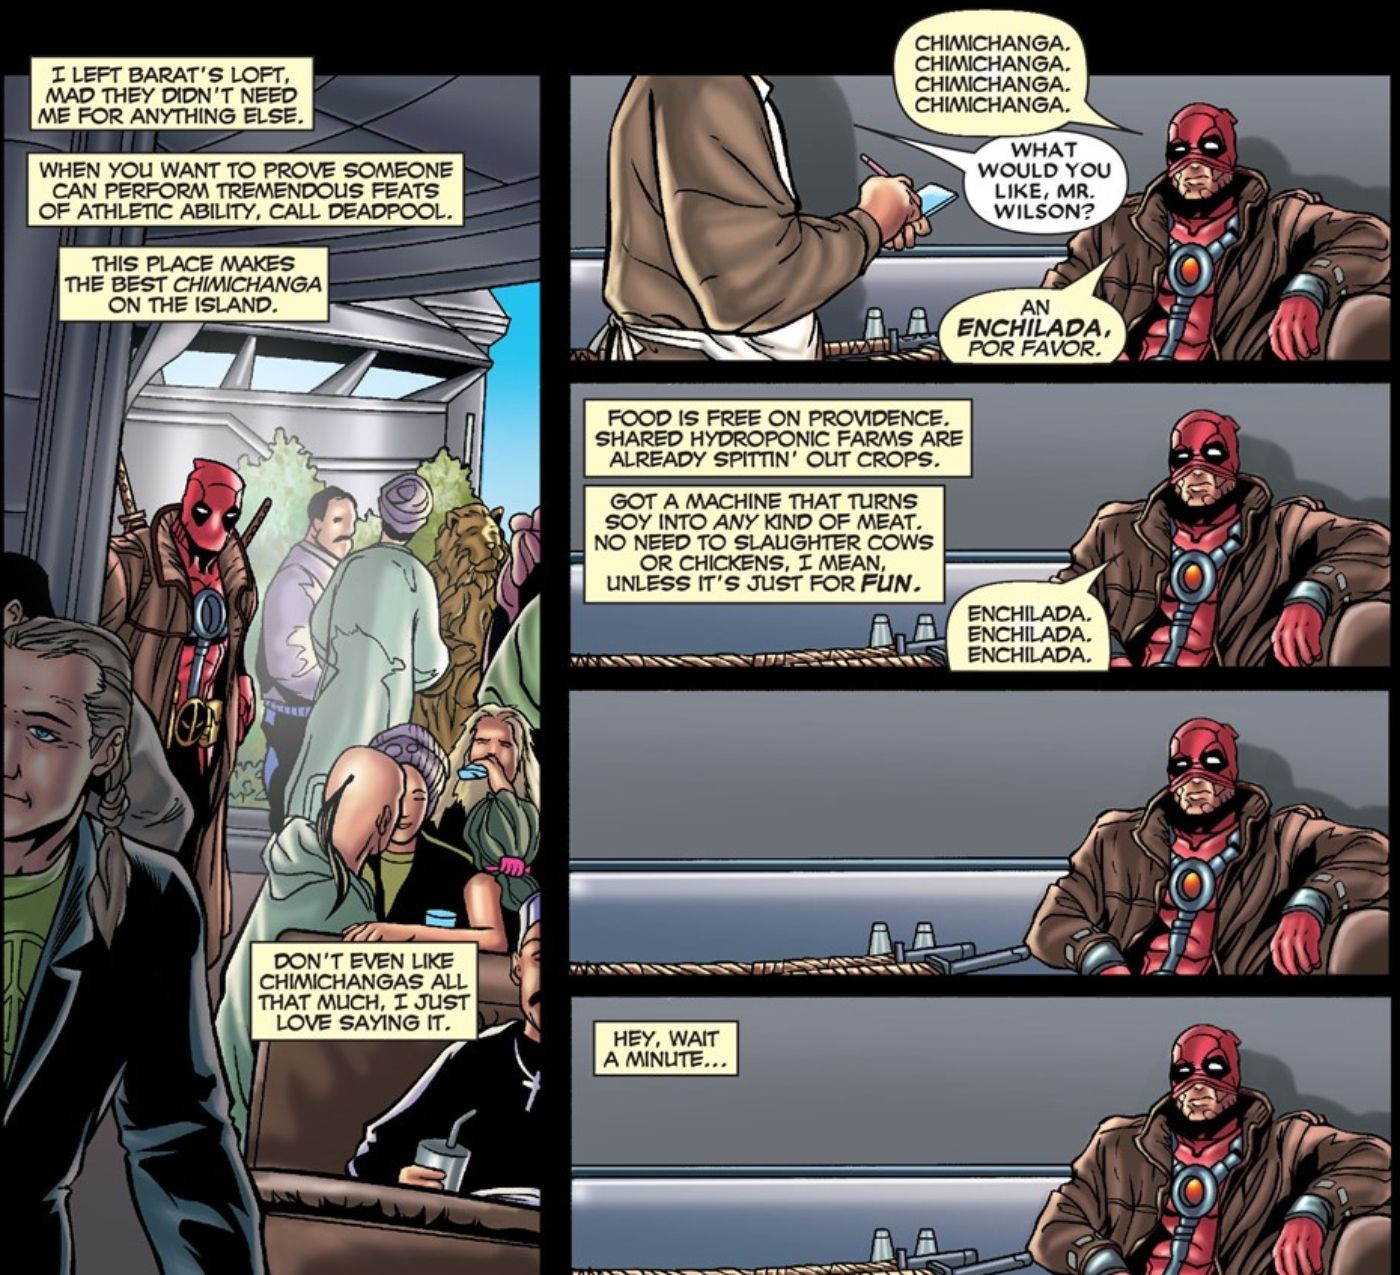 Deadpool admitindo que nem gosta de chimichangas.